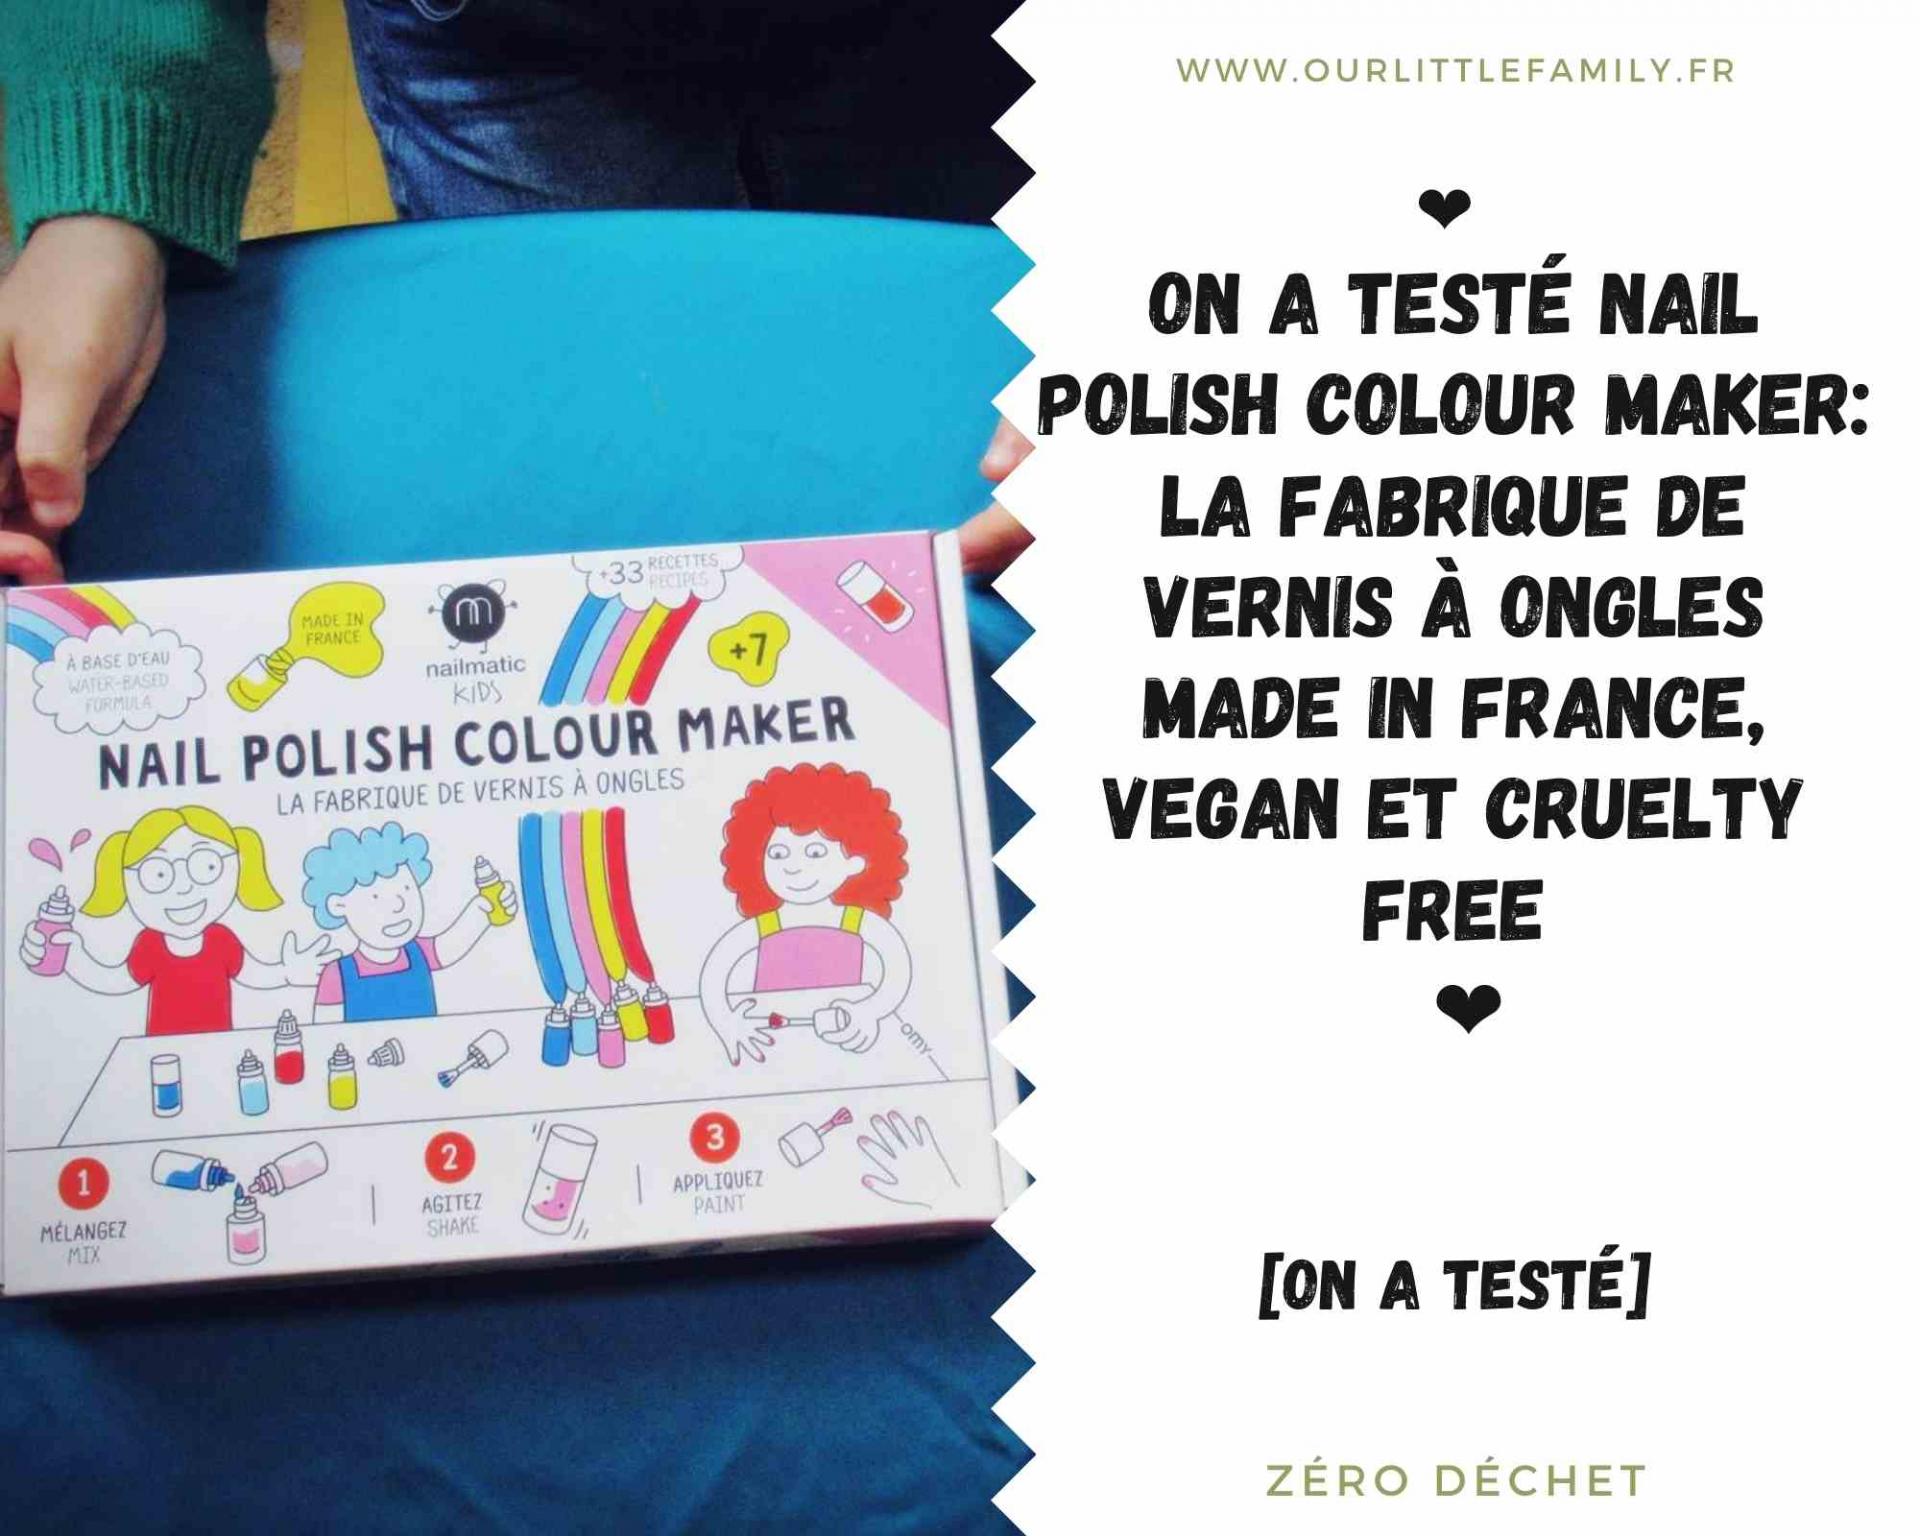 On a teste nail polish colour maker la fabrique de vernis a ongles made in france vegan et cruelty free